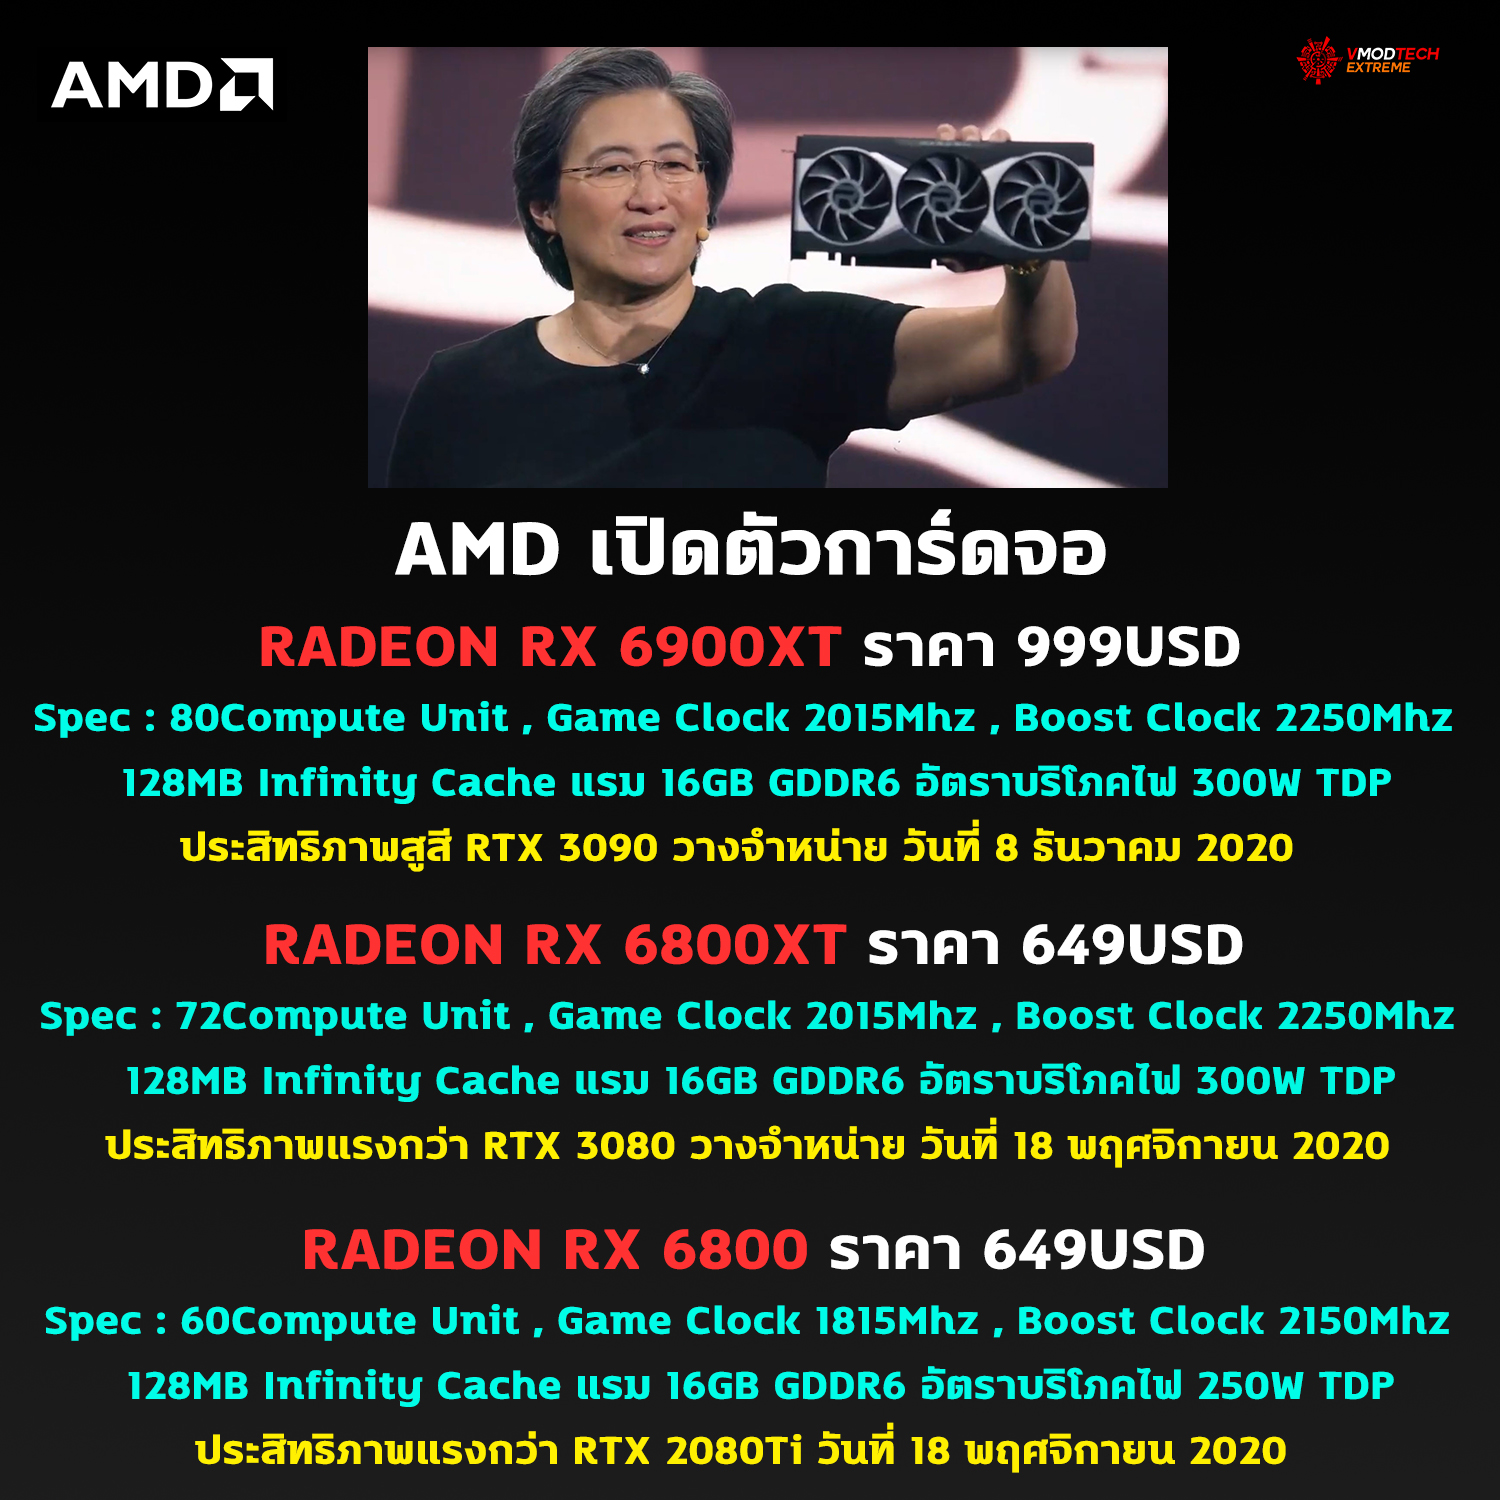 amd radeon rx 6900xt rx 6800xt rx 6800 AMD เปิดตัวการ์ดจอ AMD RADEON RX 6900XT , RX 6800XT และ RX 6800 หรือ Big Navi สถาปัตย์ RDNA2 อย่างเป็นทางการ 